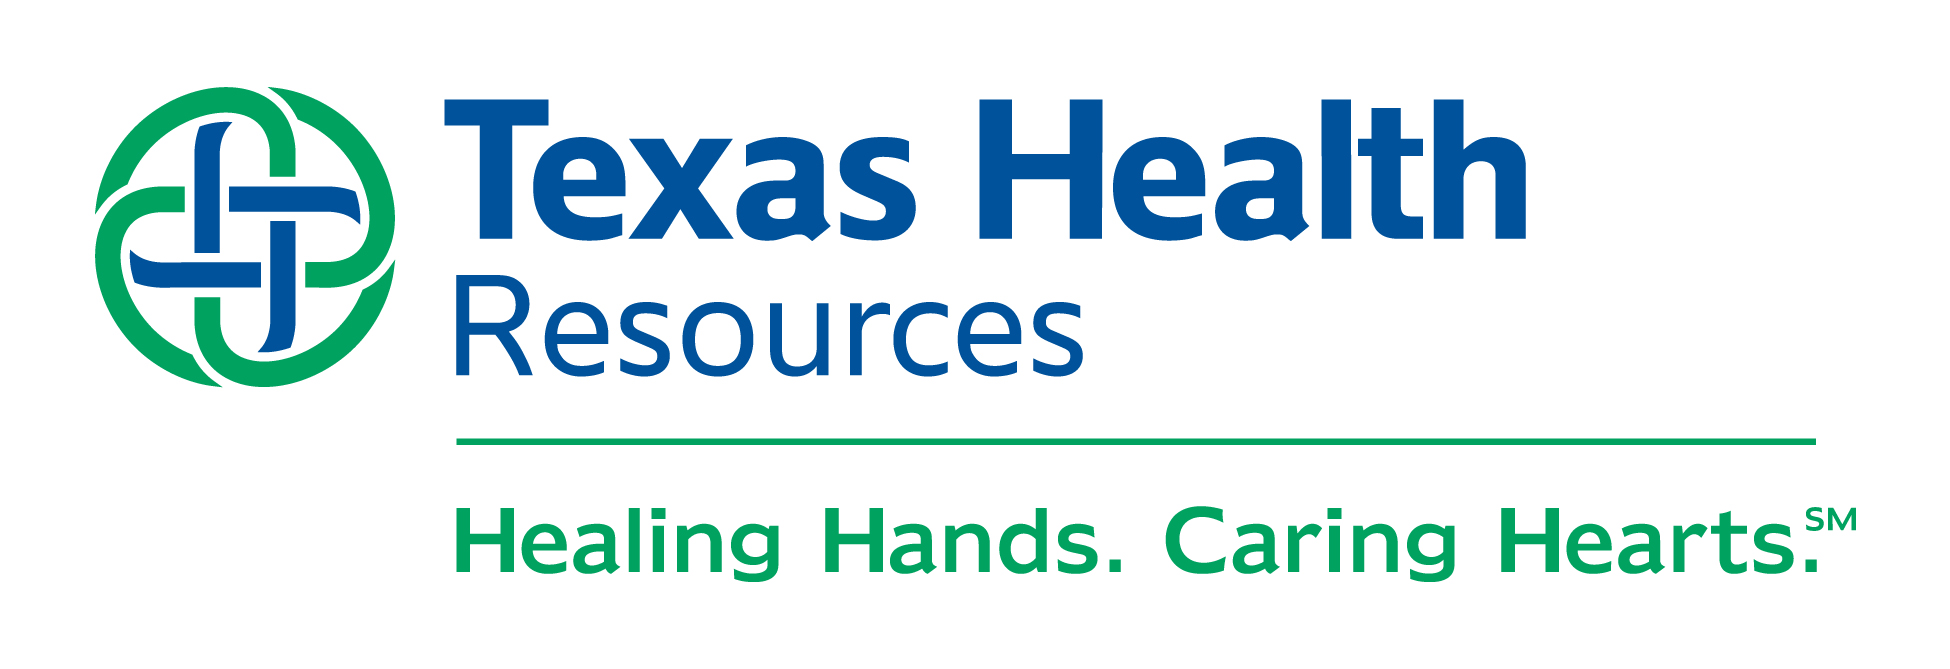 Texas Health Resources